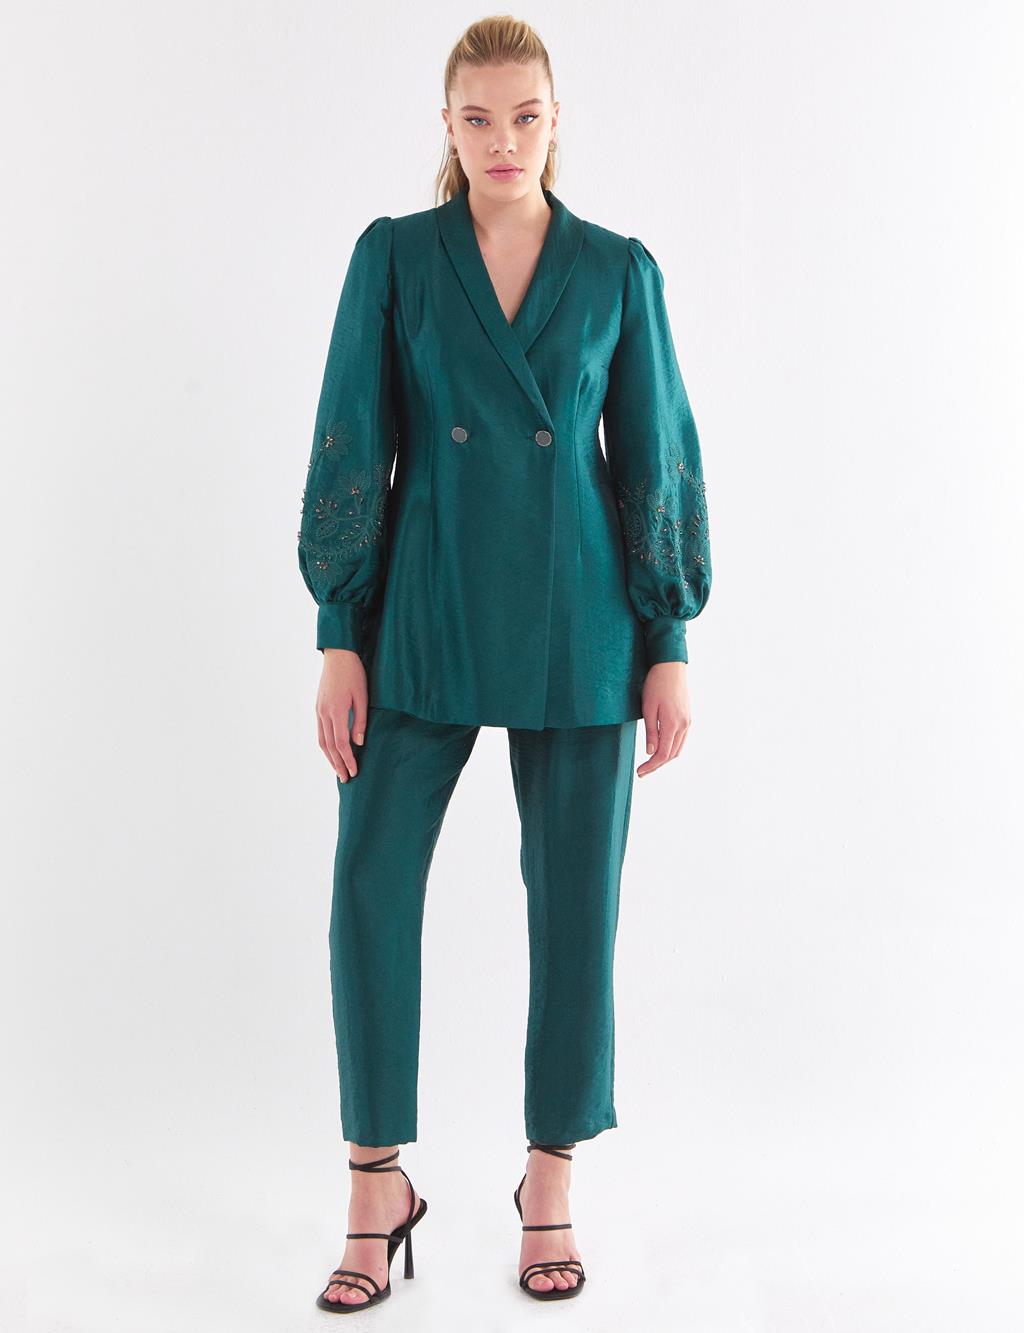 Embroidered Balloon Sleeve Jacket Pants Suit Emerald